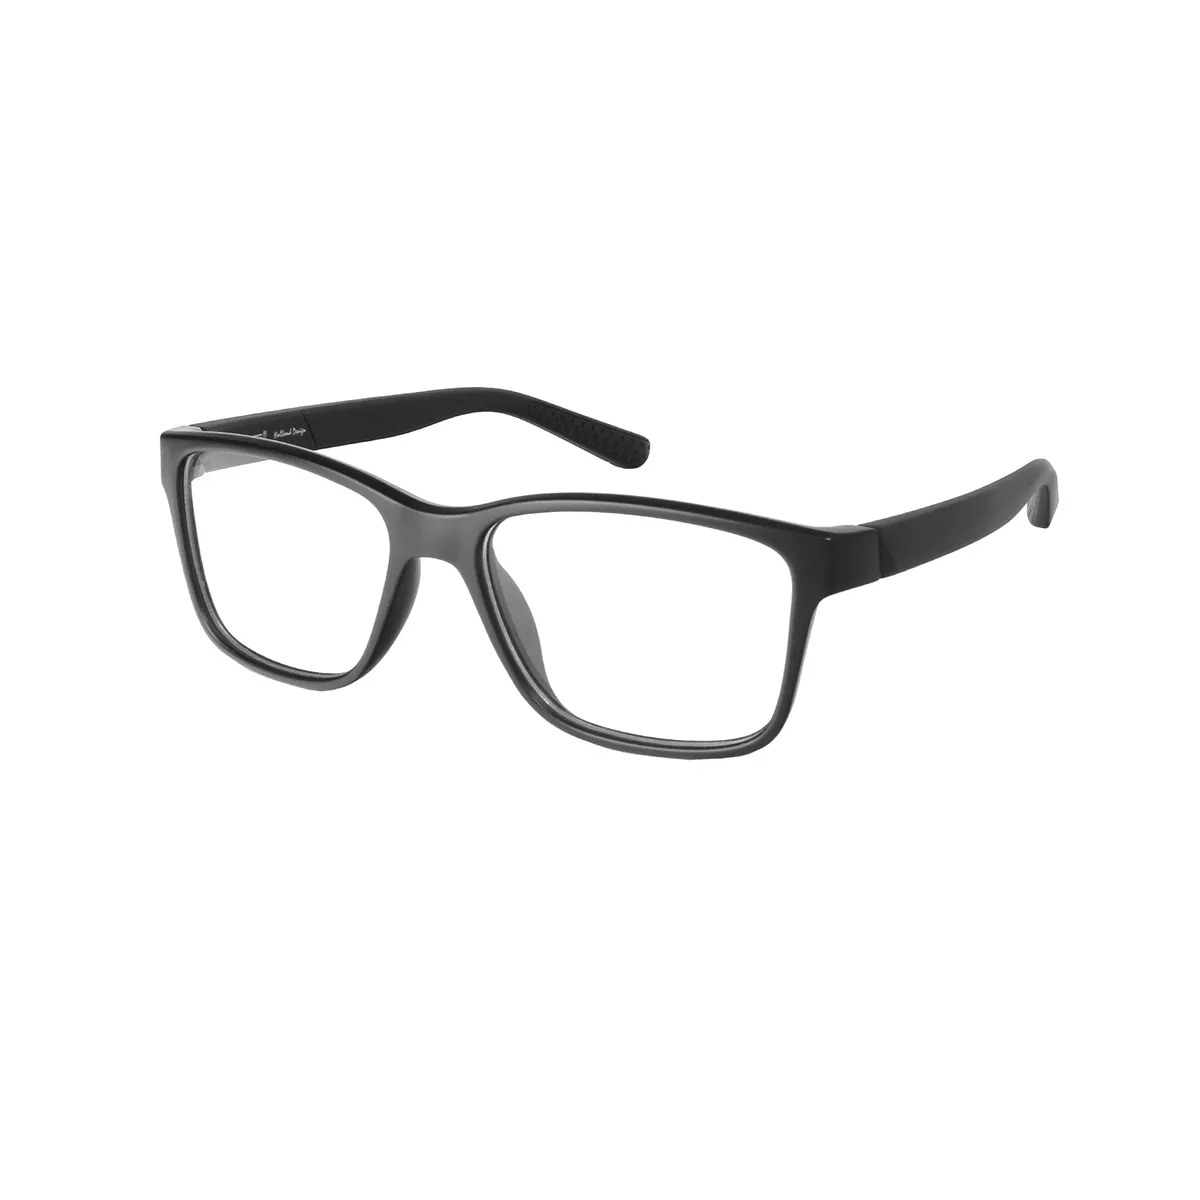 Jamison - Square Black Glasses for Men